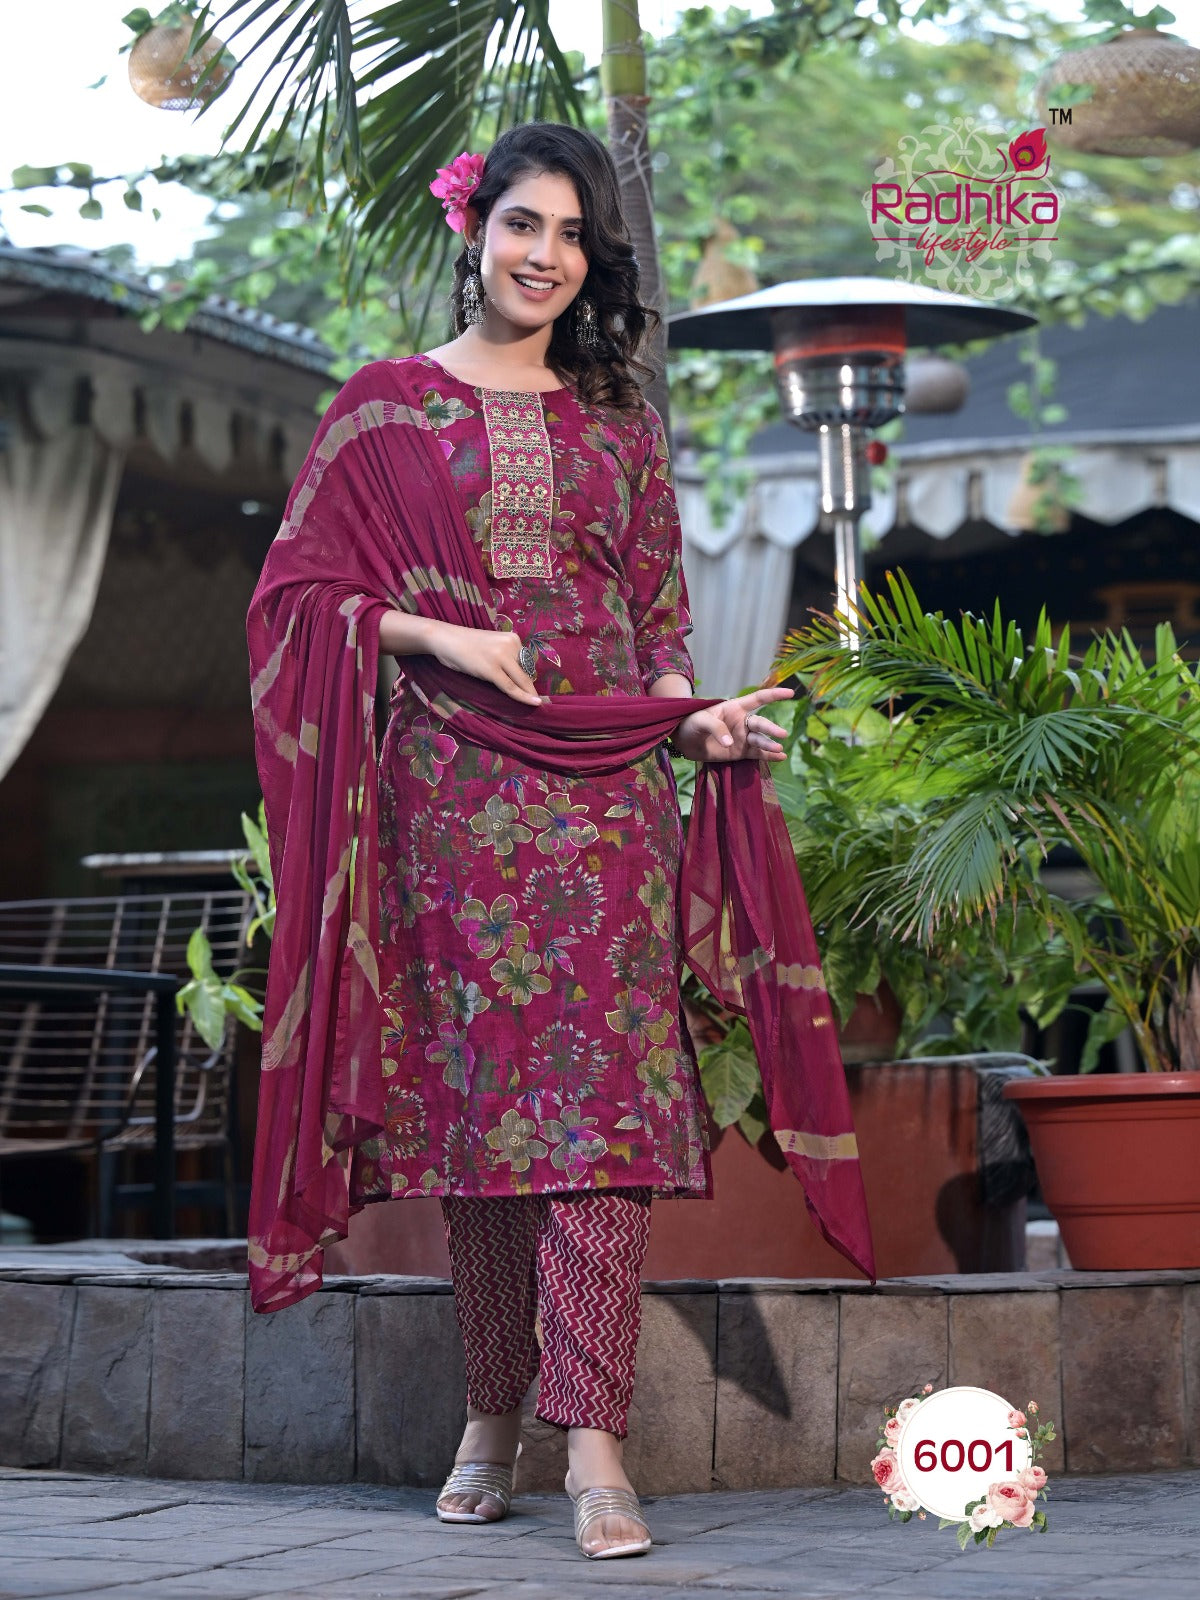 Seerat Vol 6 Radhika Lifestyle Rayon Readymade Pant Style Suits